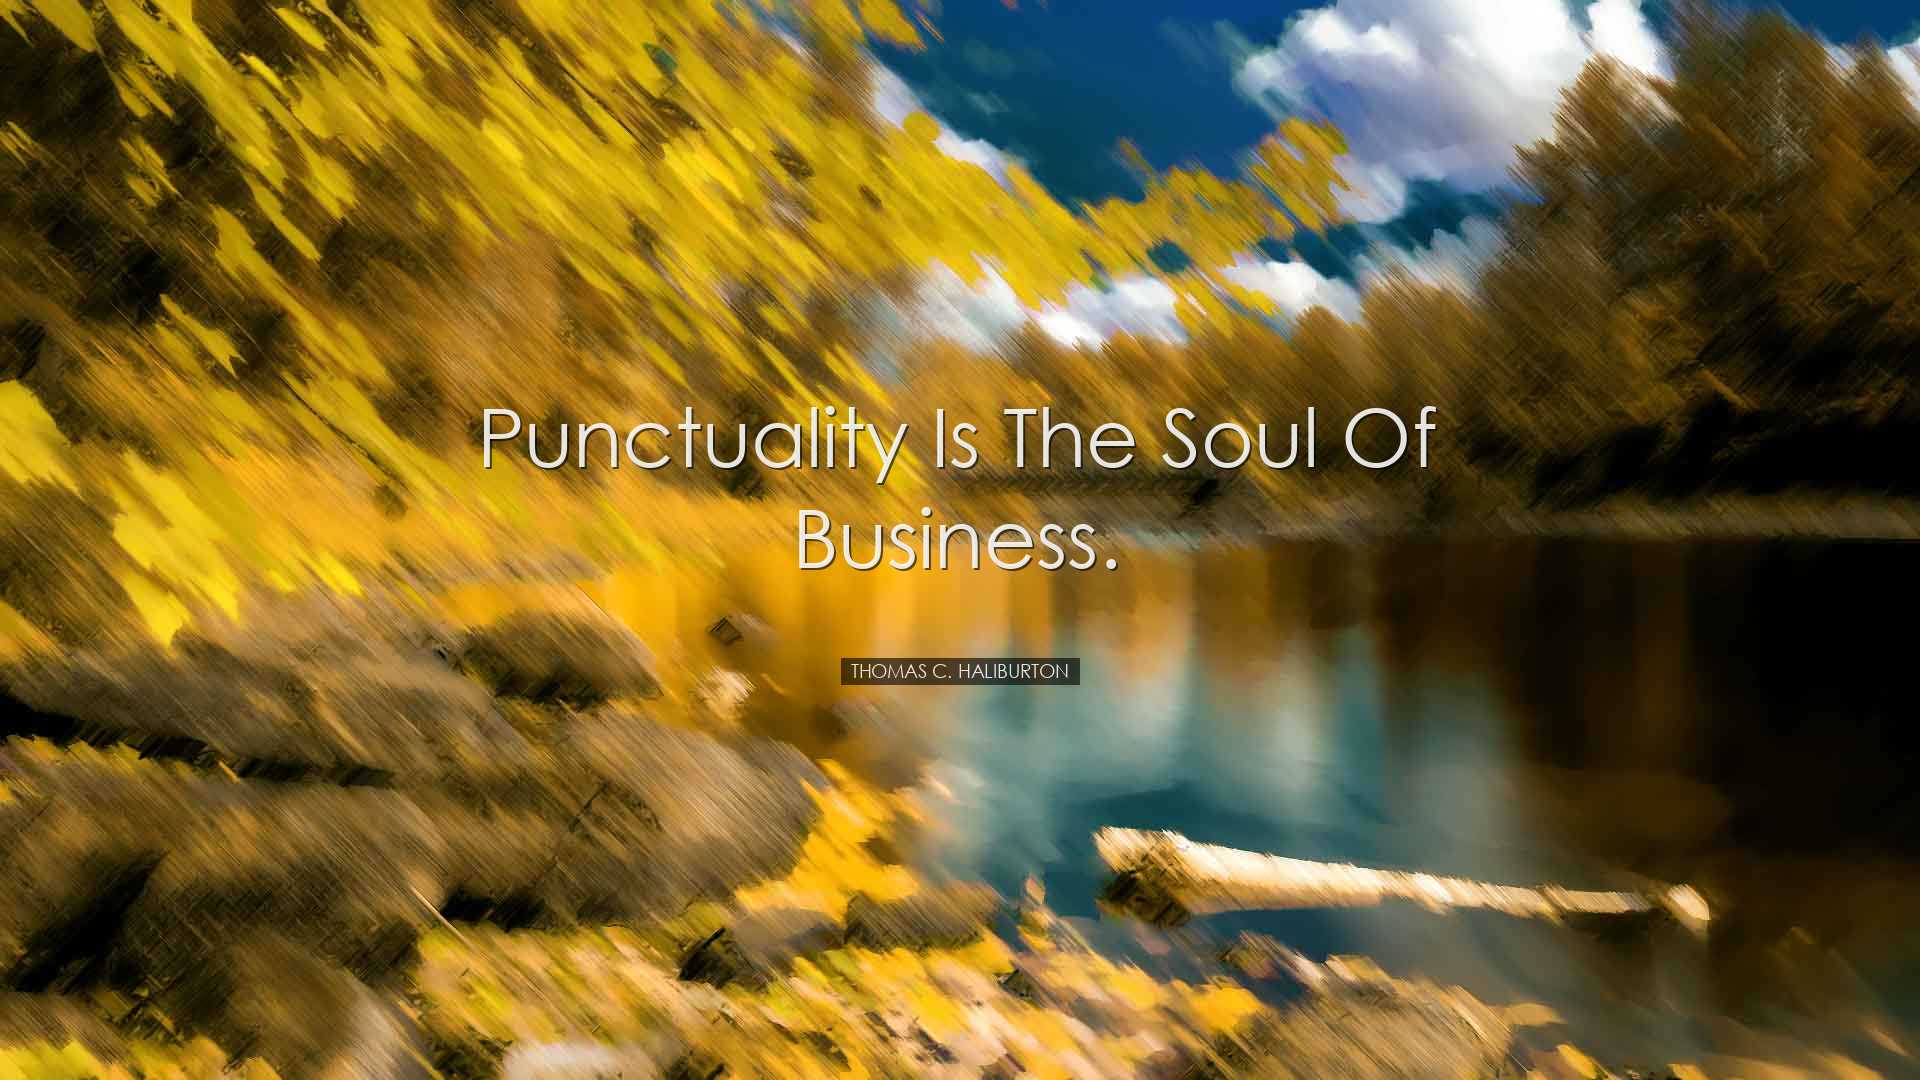 Punctuality is the soul of business. - Thomas C. Haliburton